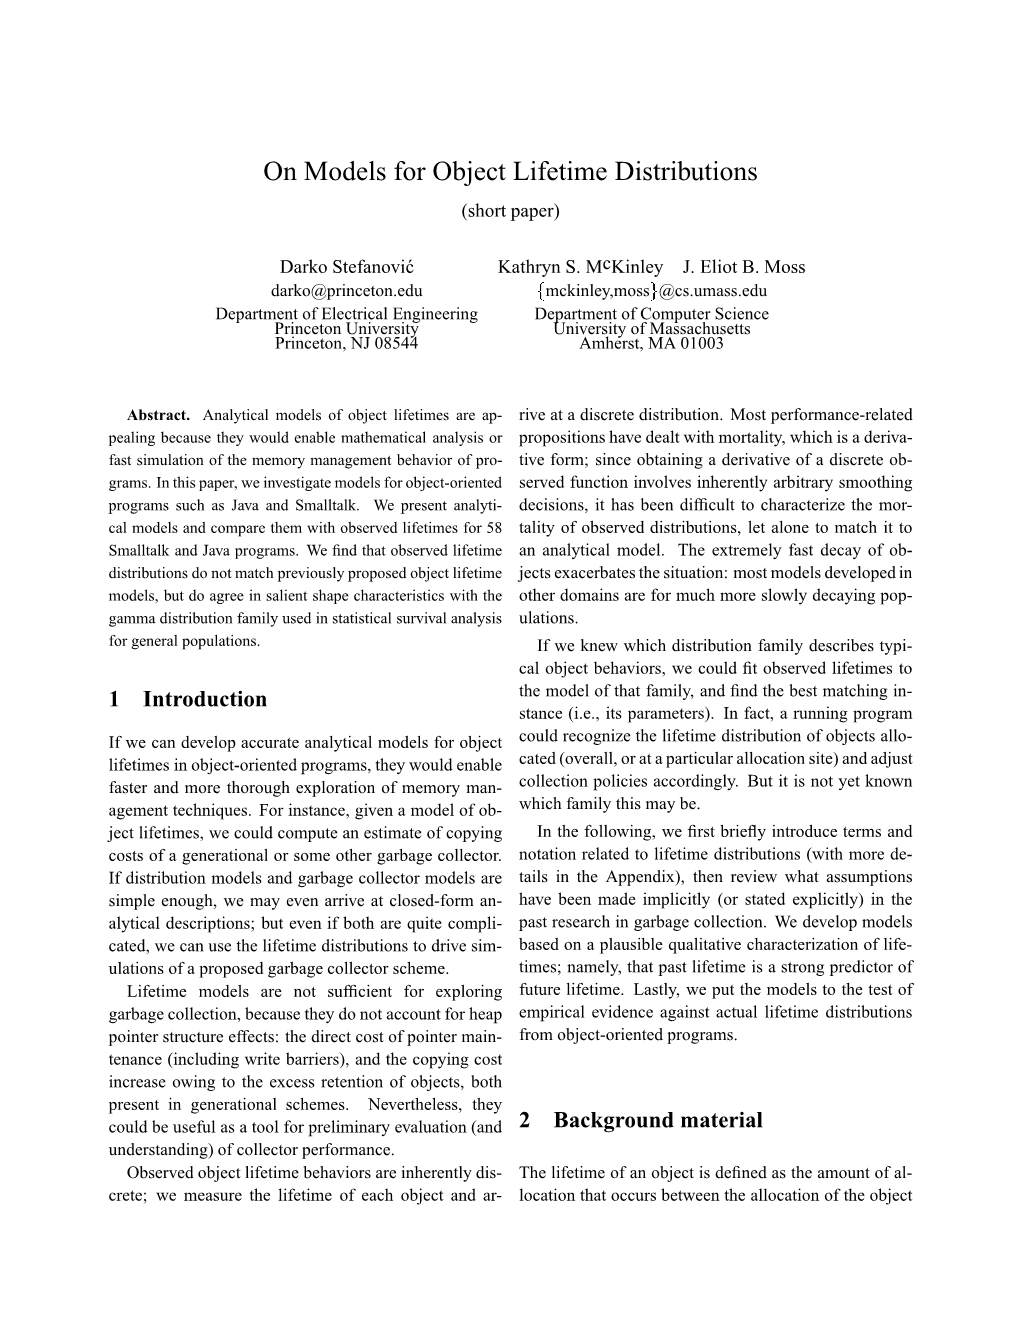 On Models for Object Lifetime Distributions (Short Paper)